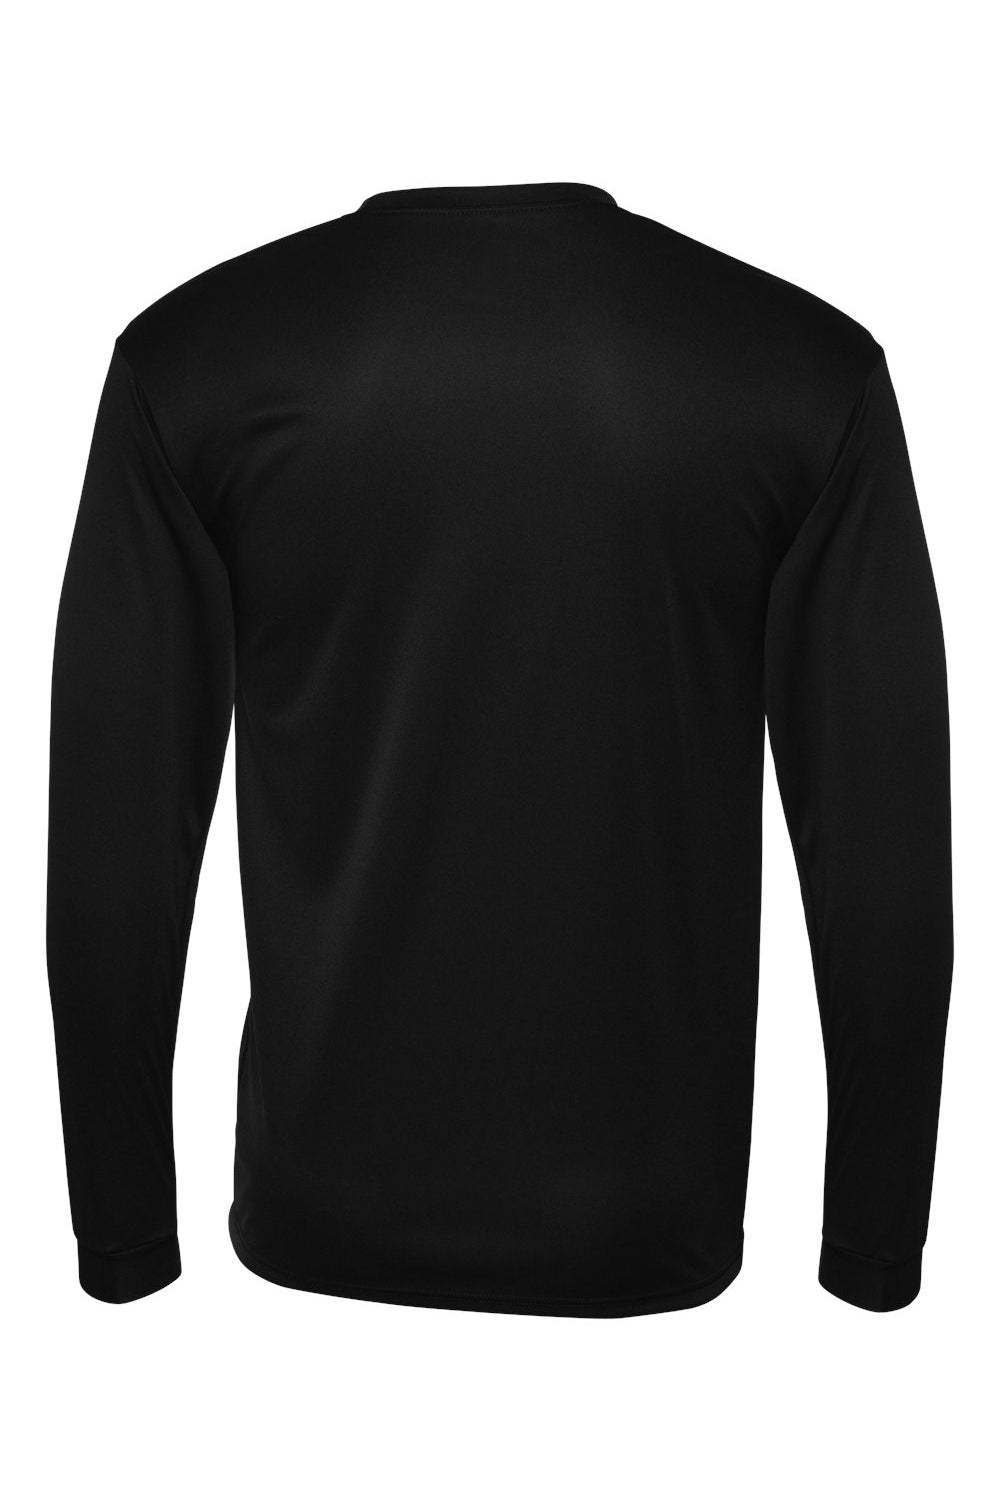 C2 Sport 5104 Mens Performance Moisture Wicking Long Sleeve Crewneck T-Shirt Black Flat Back